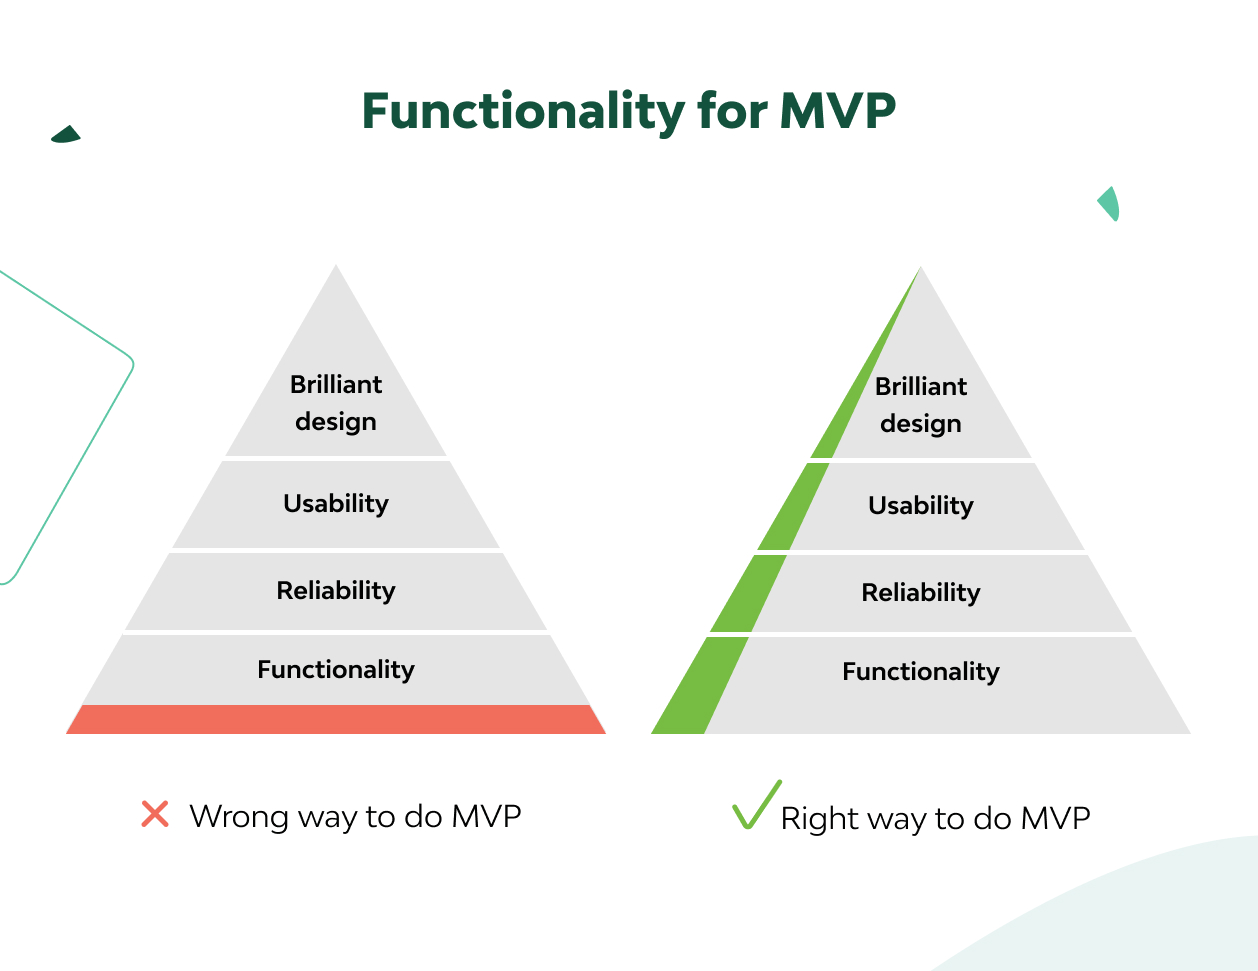  Defining MVP, MBI, MMF, and MMR